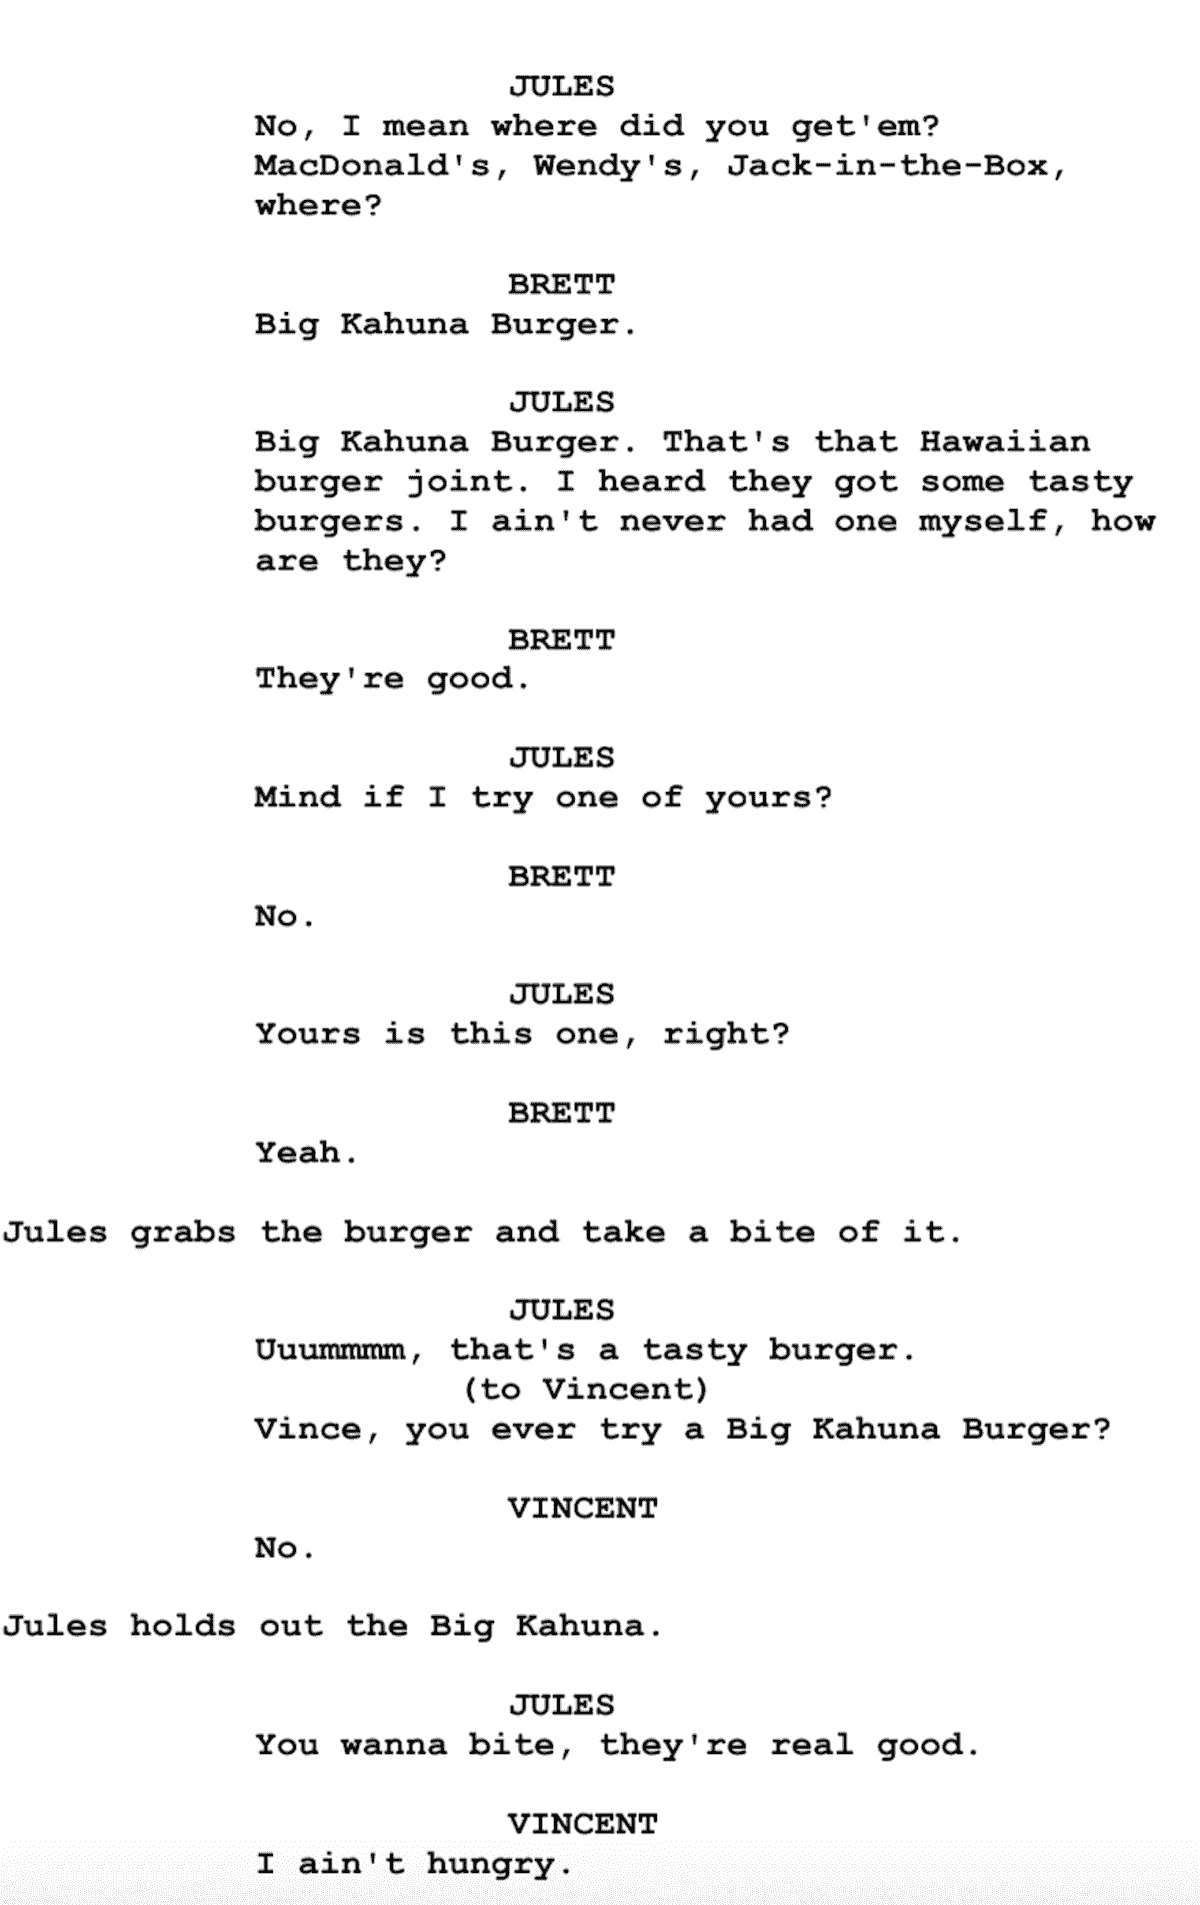 Screenplay Examples - Pulp Fiction Script - Screenplay Snippet 13 - Big Kahuna Burger